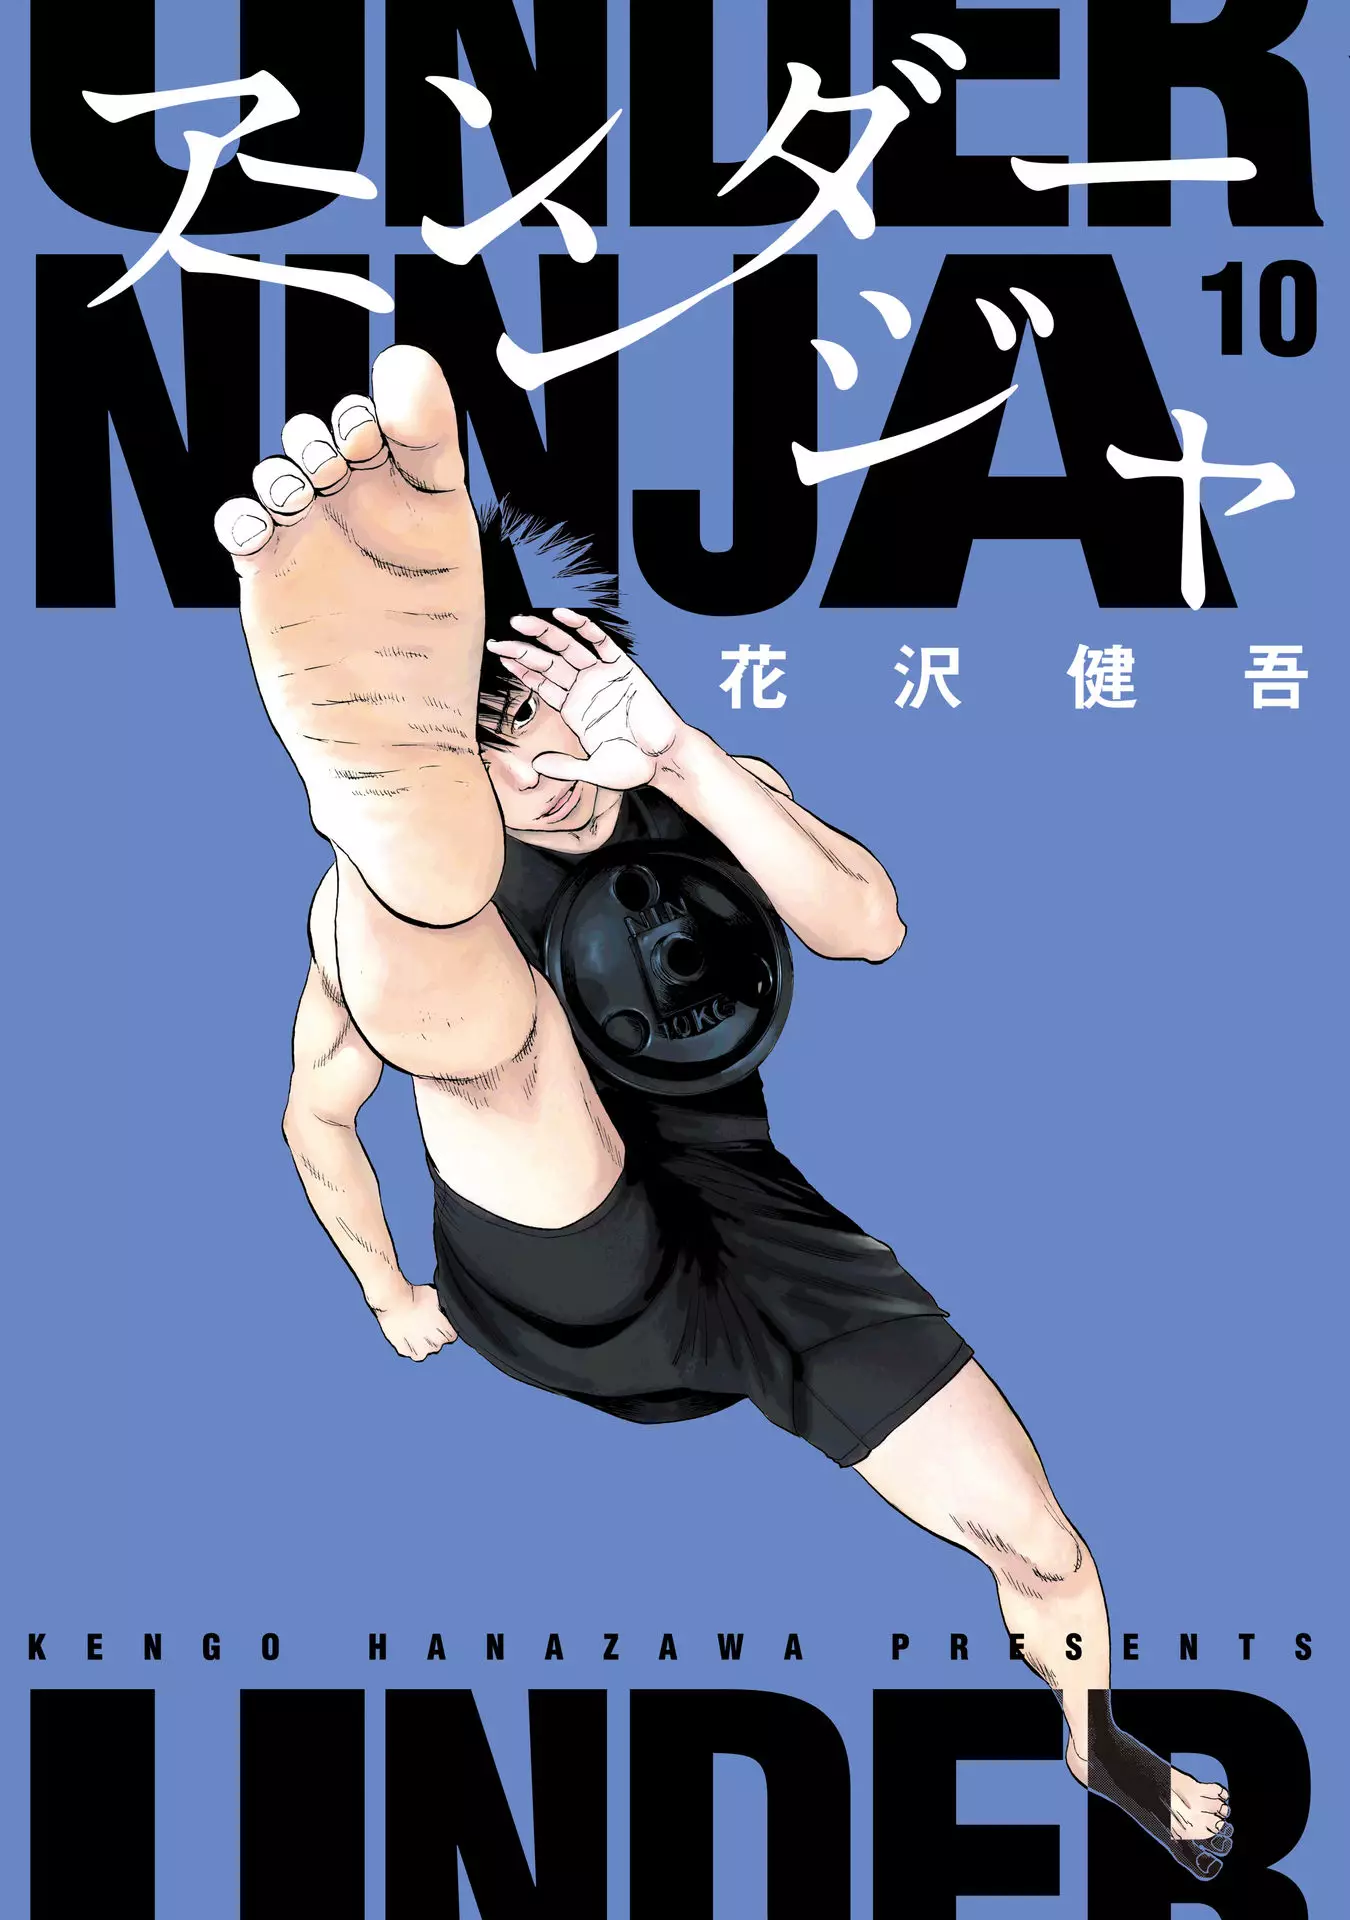 Read Under Ninja 96 - Oni Scan